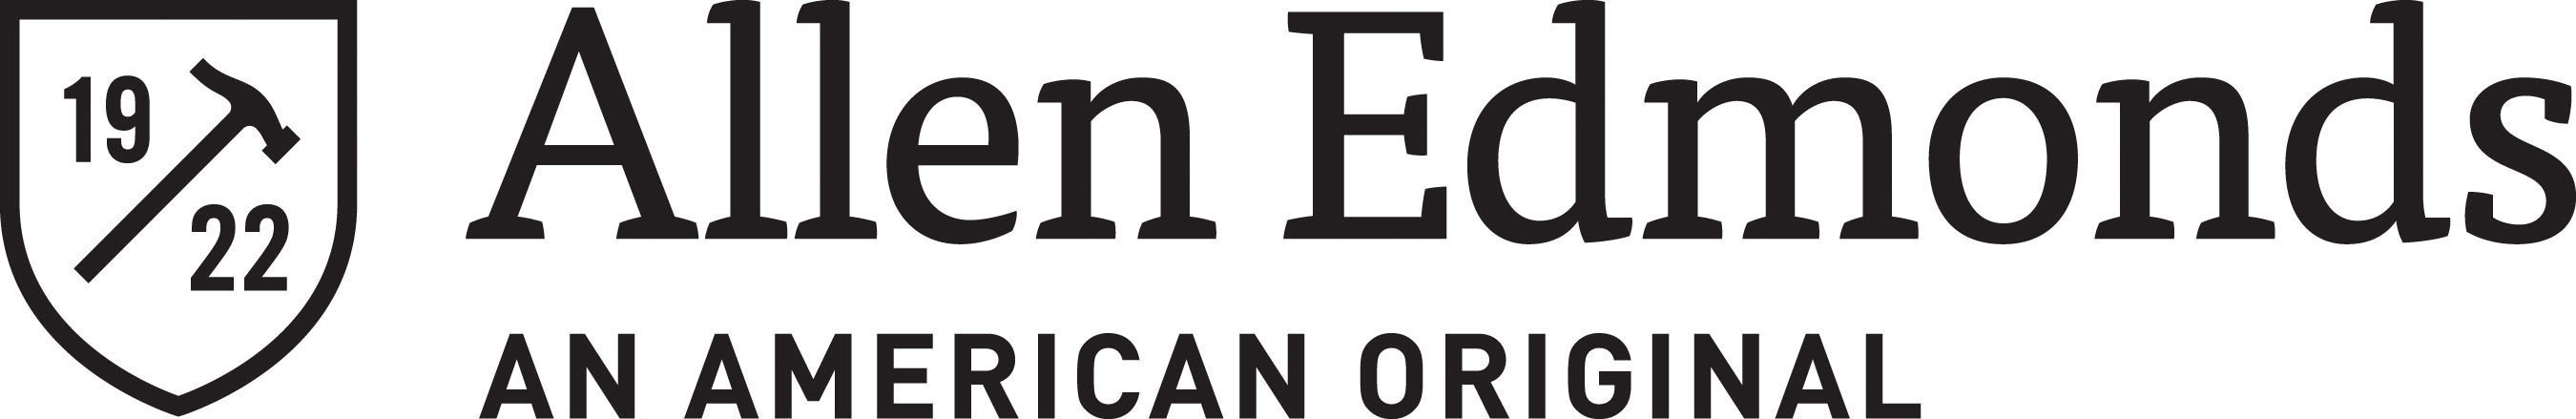 Allen Edmonds Logo. (PRNewsFoto/Allen Edmonds Corporation) (PRNewsFoto/ALLEN EDMONDS CORPORATION)